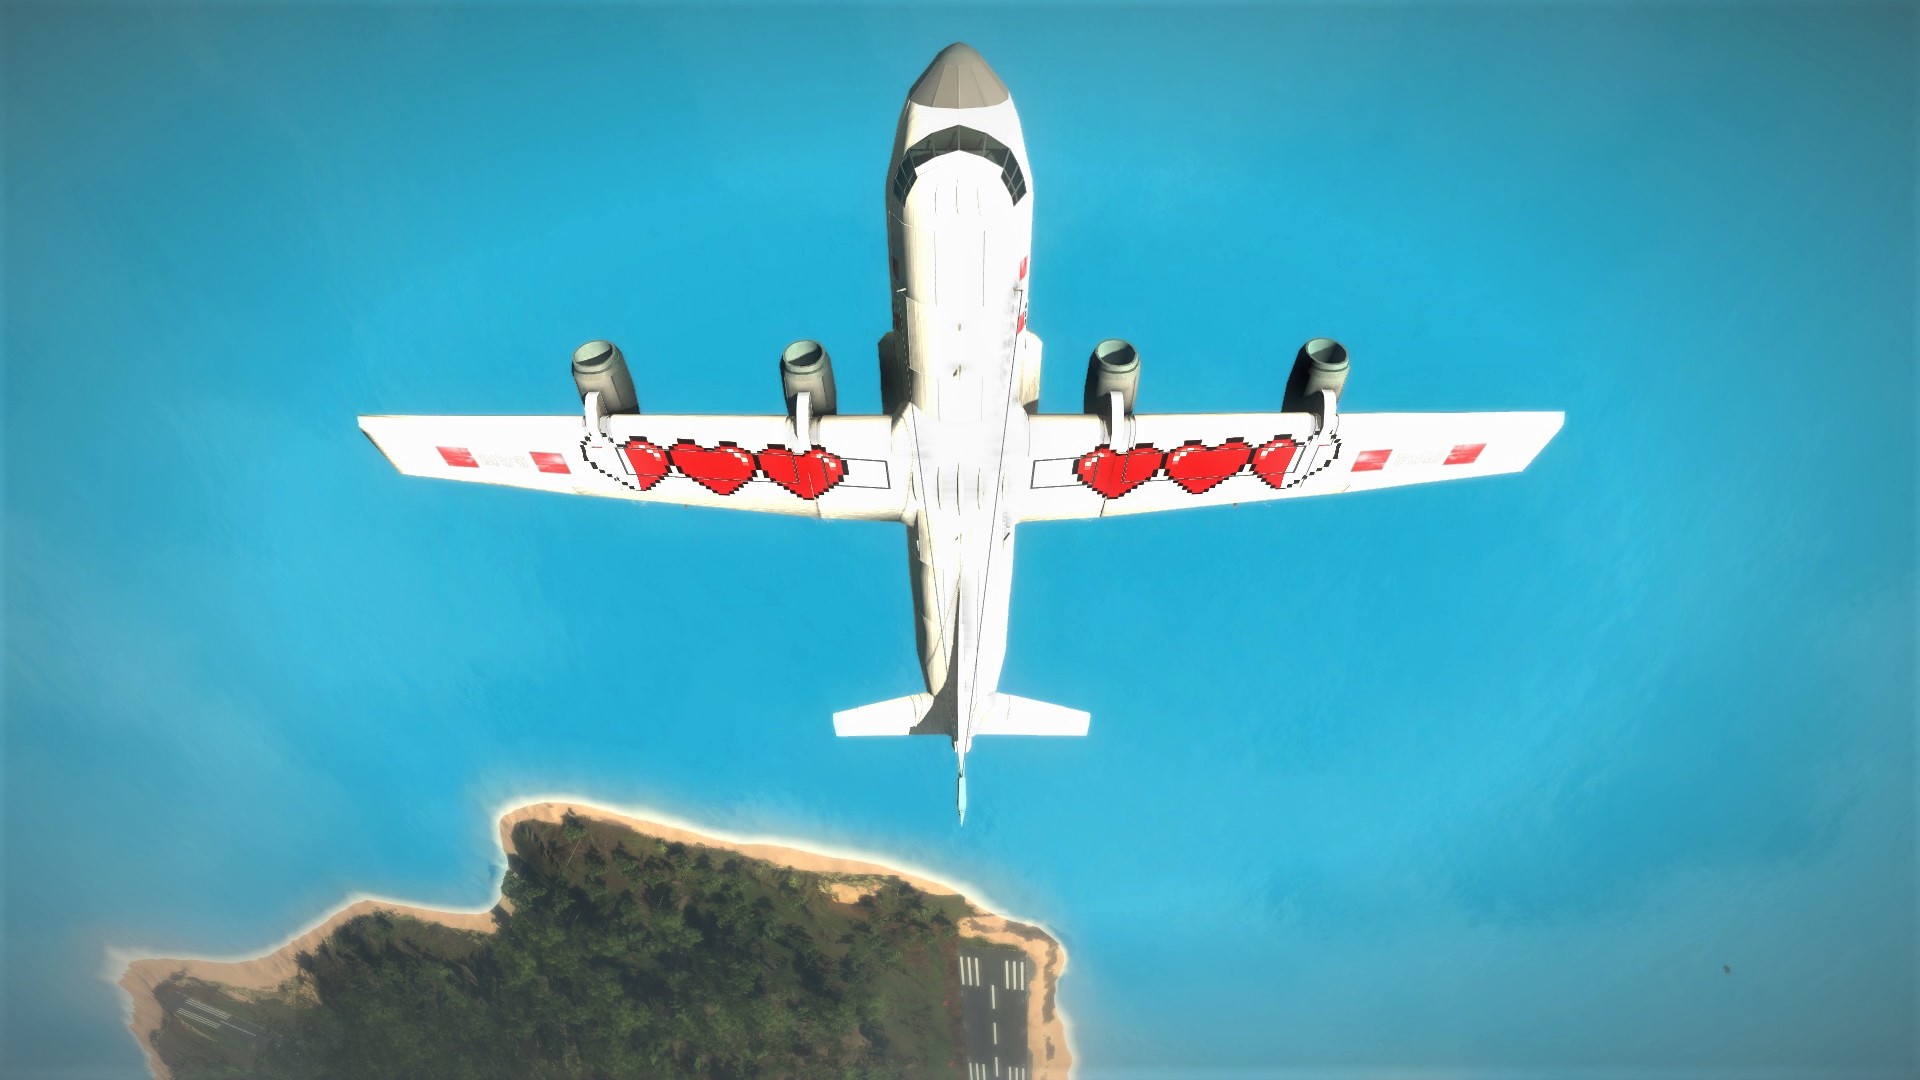 Bering I-86DP (Cargo Plane) with Zelda hearts on wings.